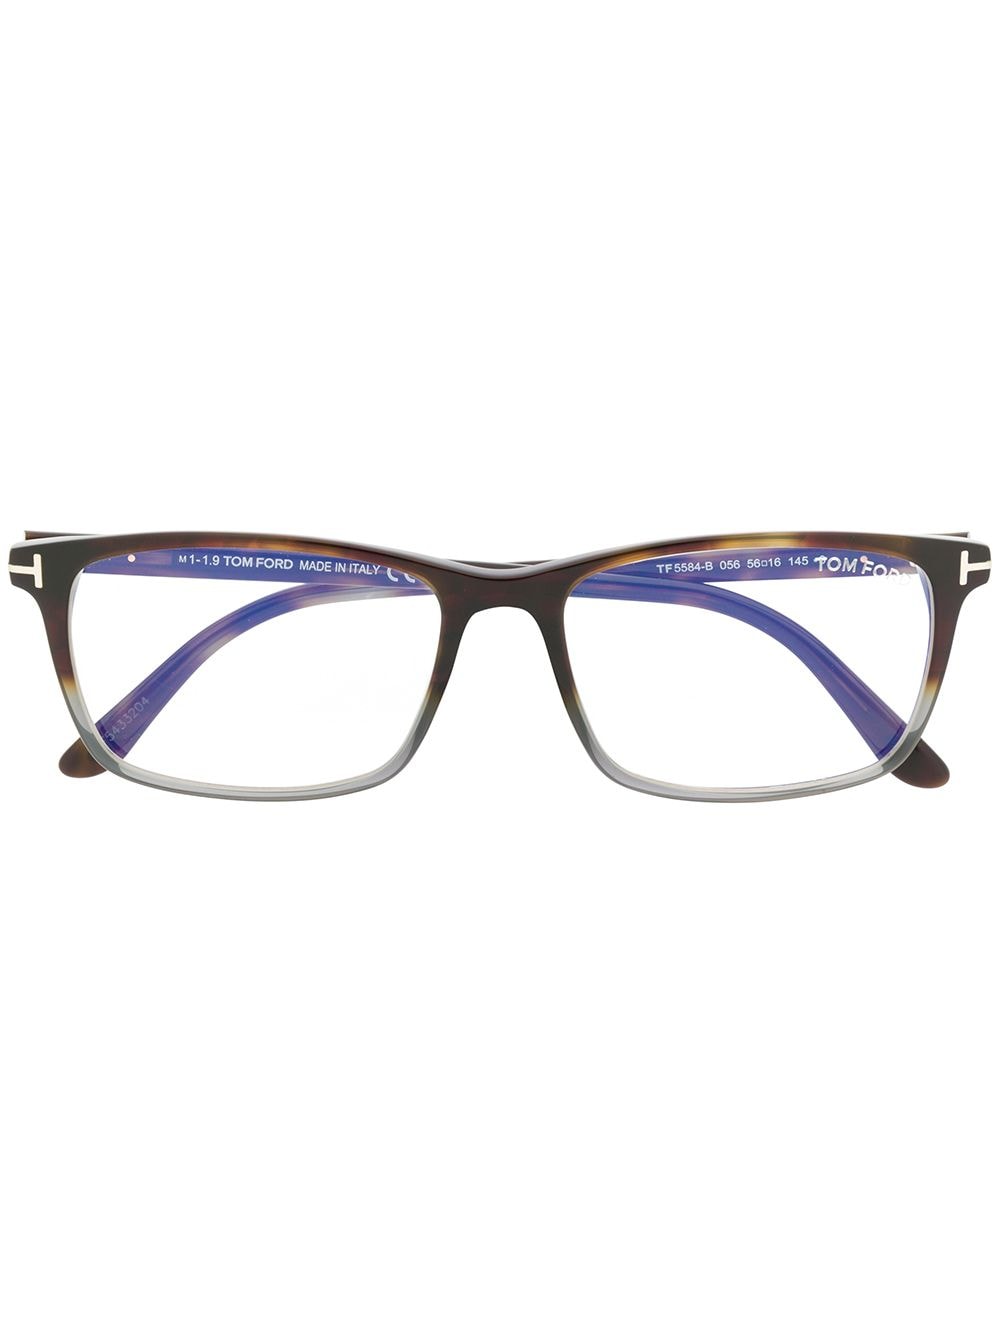 TOM FORD Eyewear classic square glasses - Brown von TOM FORD Eyewear